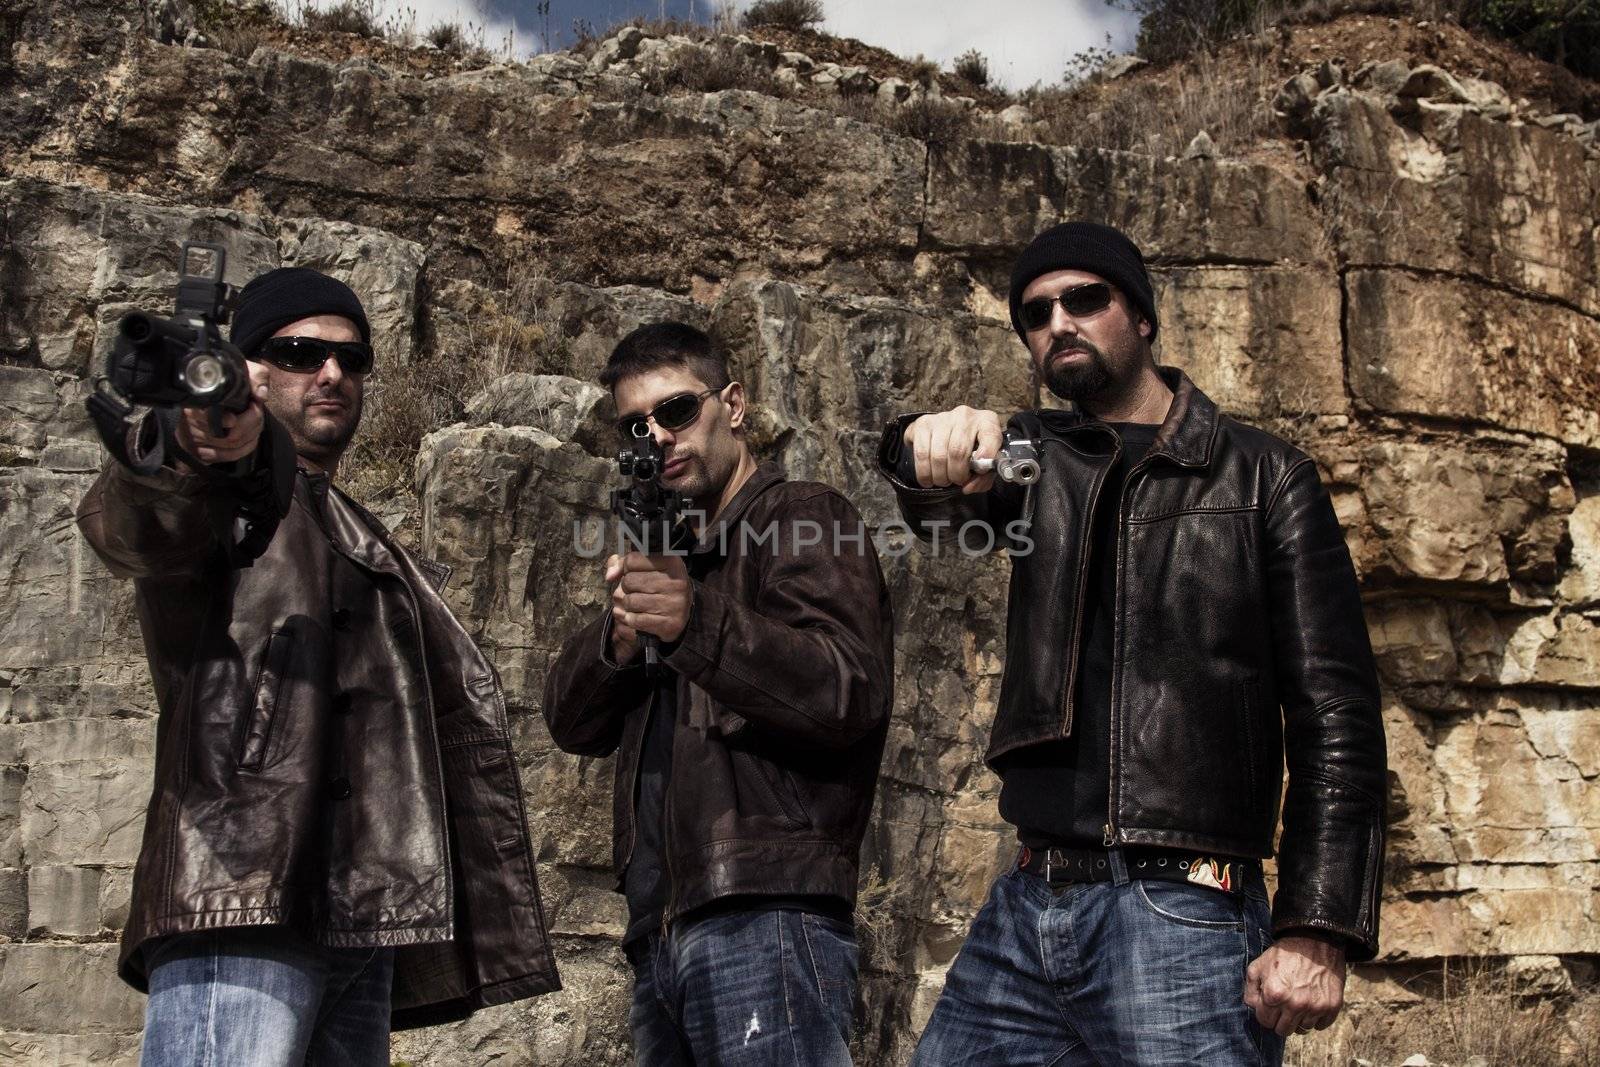 gang members with guns by membio